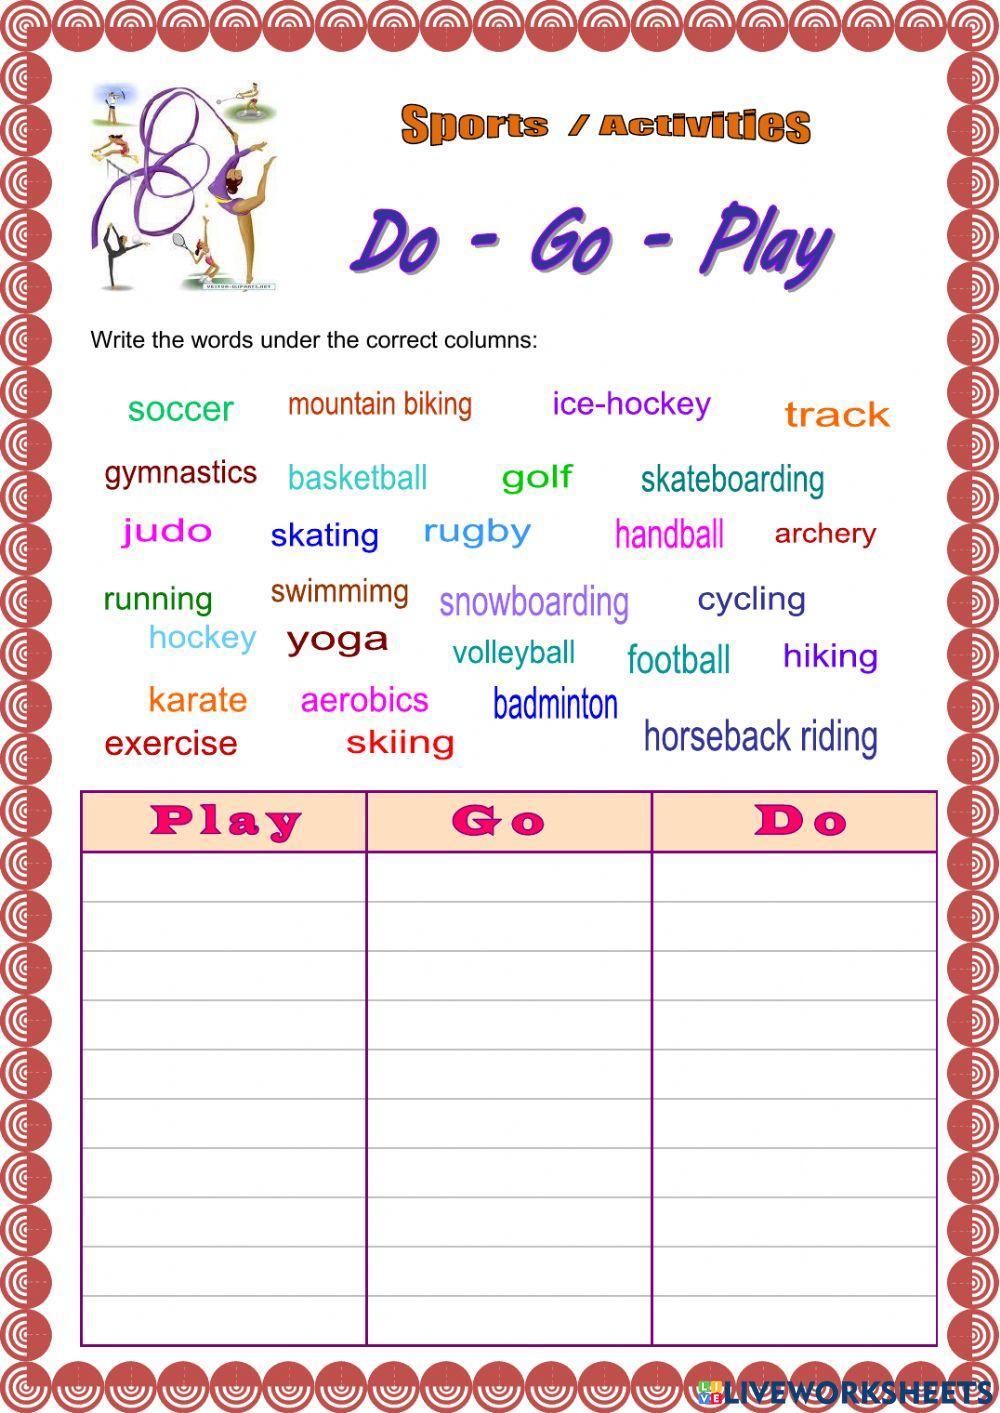 Sports - do - play - go worksheet | Live Worksheets